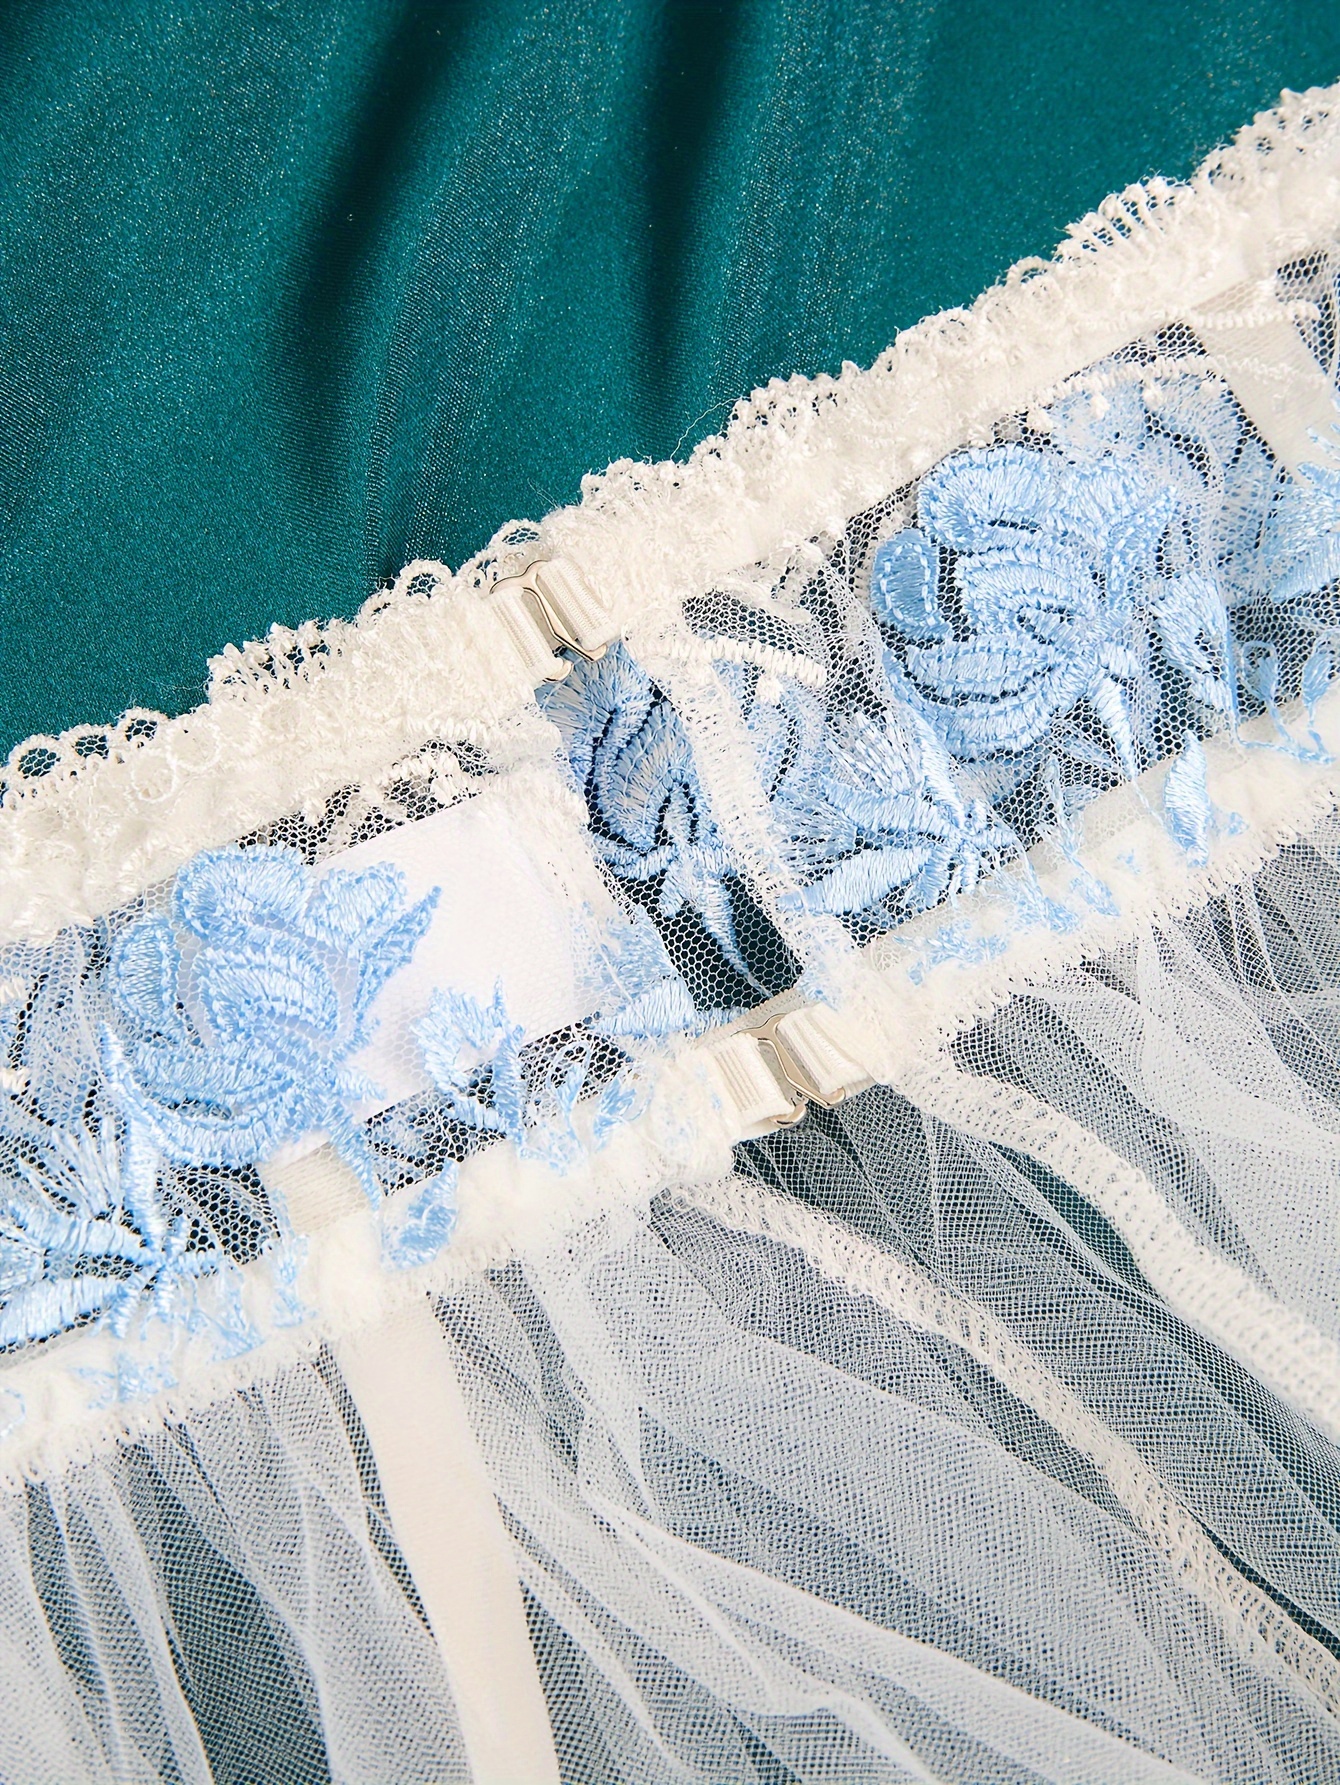 YUUMIN Woman's Lace Sheer Embroidery Balconette 1/4 Cup Push Up Shelf Bra  Thong Underwear Lingerie Set Blue M - ShopStyle